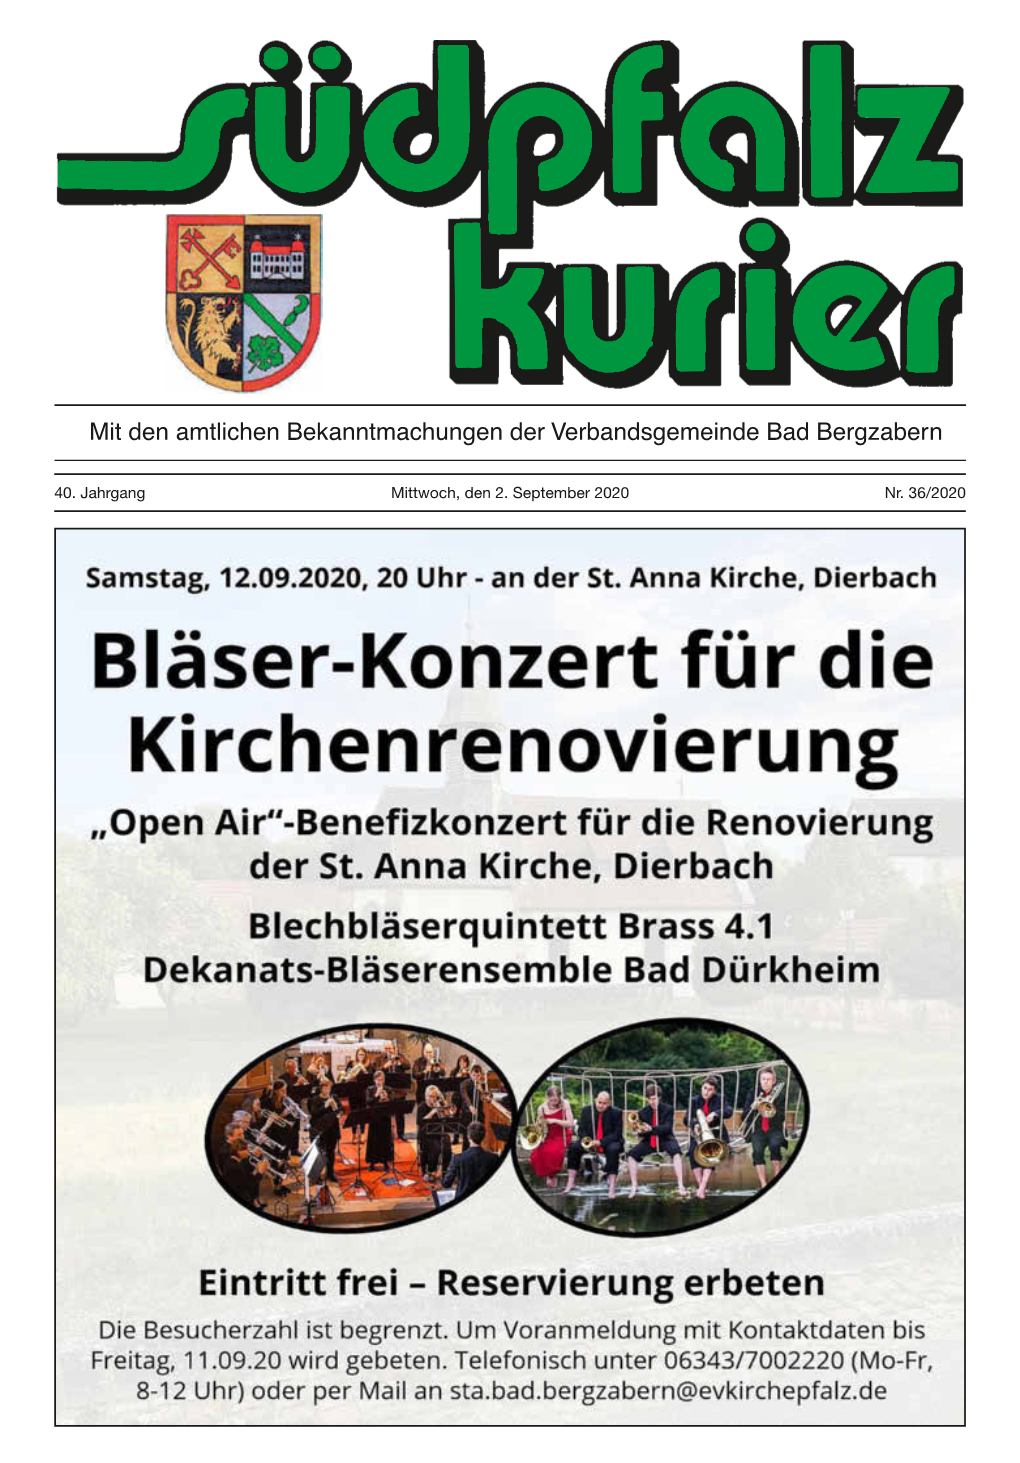 40. Jahrgang Mittwoch, Den 2. September 2020 Nr. 36/2020 Bad Bergzabern, Den 02.09.2020 - 2 - Südpfalz Kurier - Ausgabe 36/2020 Auf Einen Blick